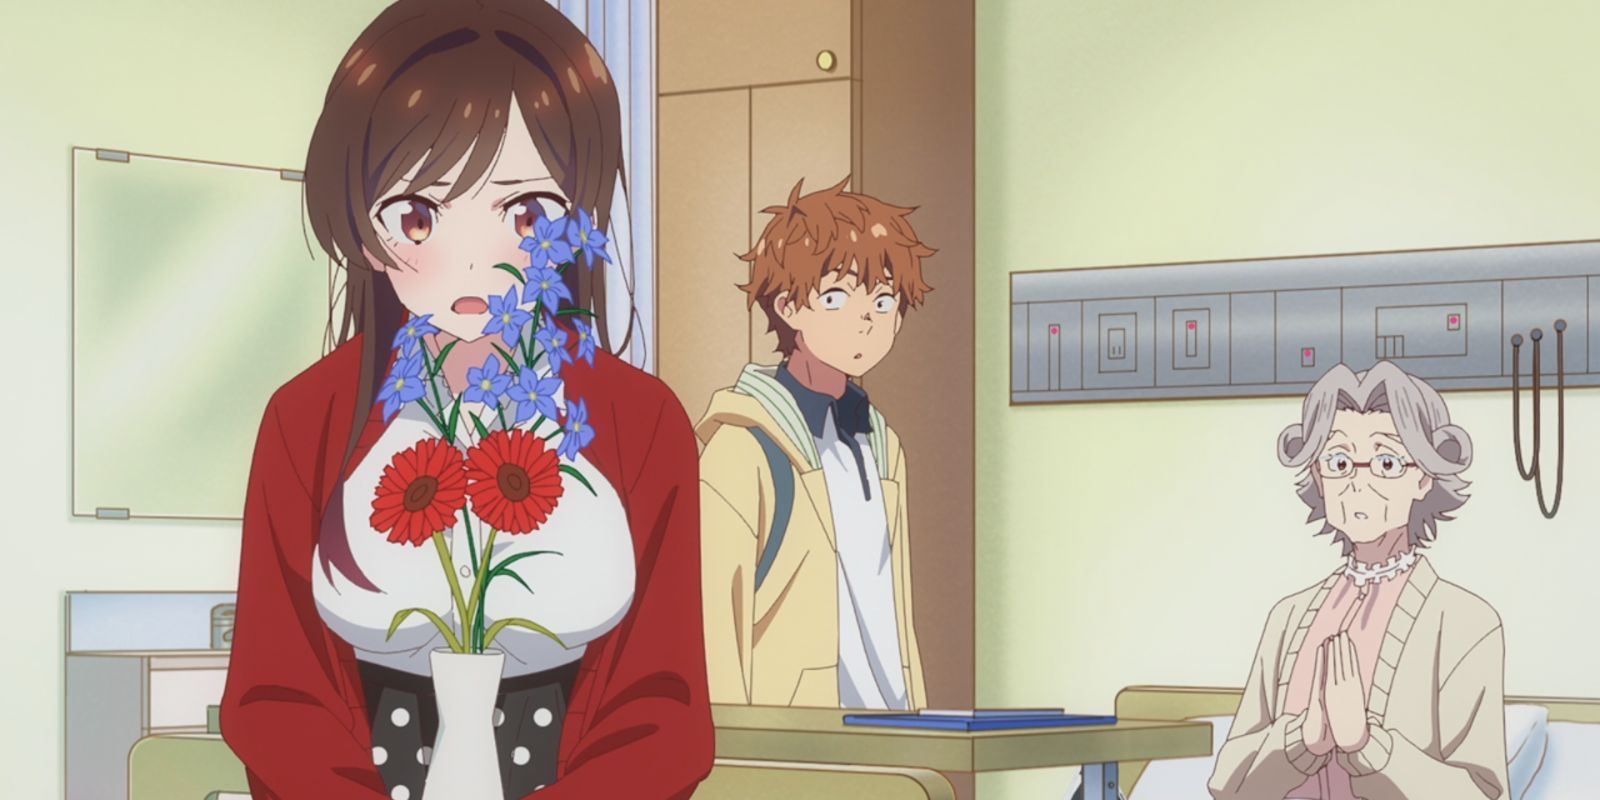 rent-a-boyfriend episode 3 season 2 mizuhara flashback with grandma replacing flowers